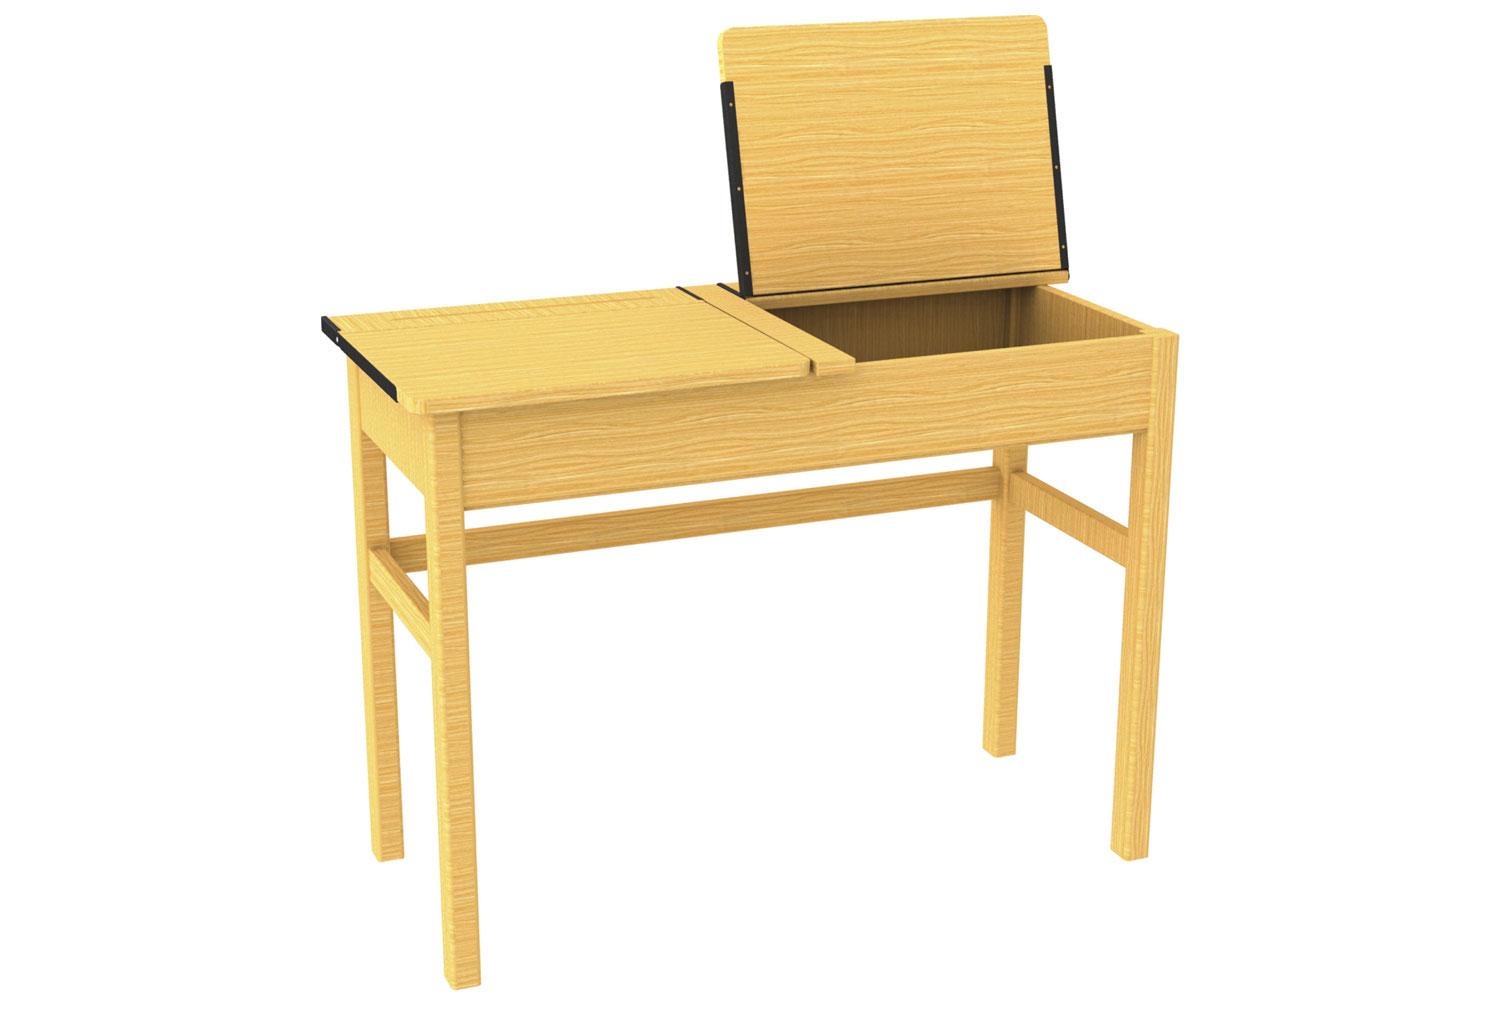 Scholar Double Wooden Locker Desk, 115wx46dx65h (cm), Beech